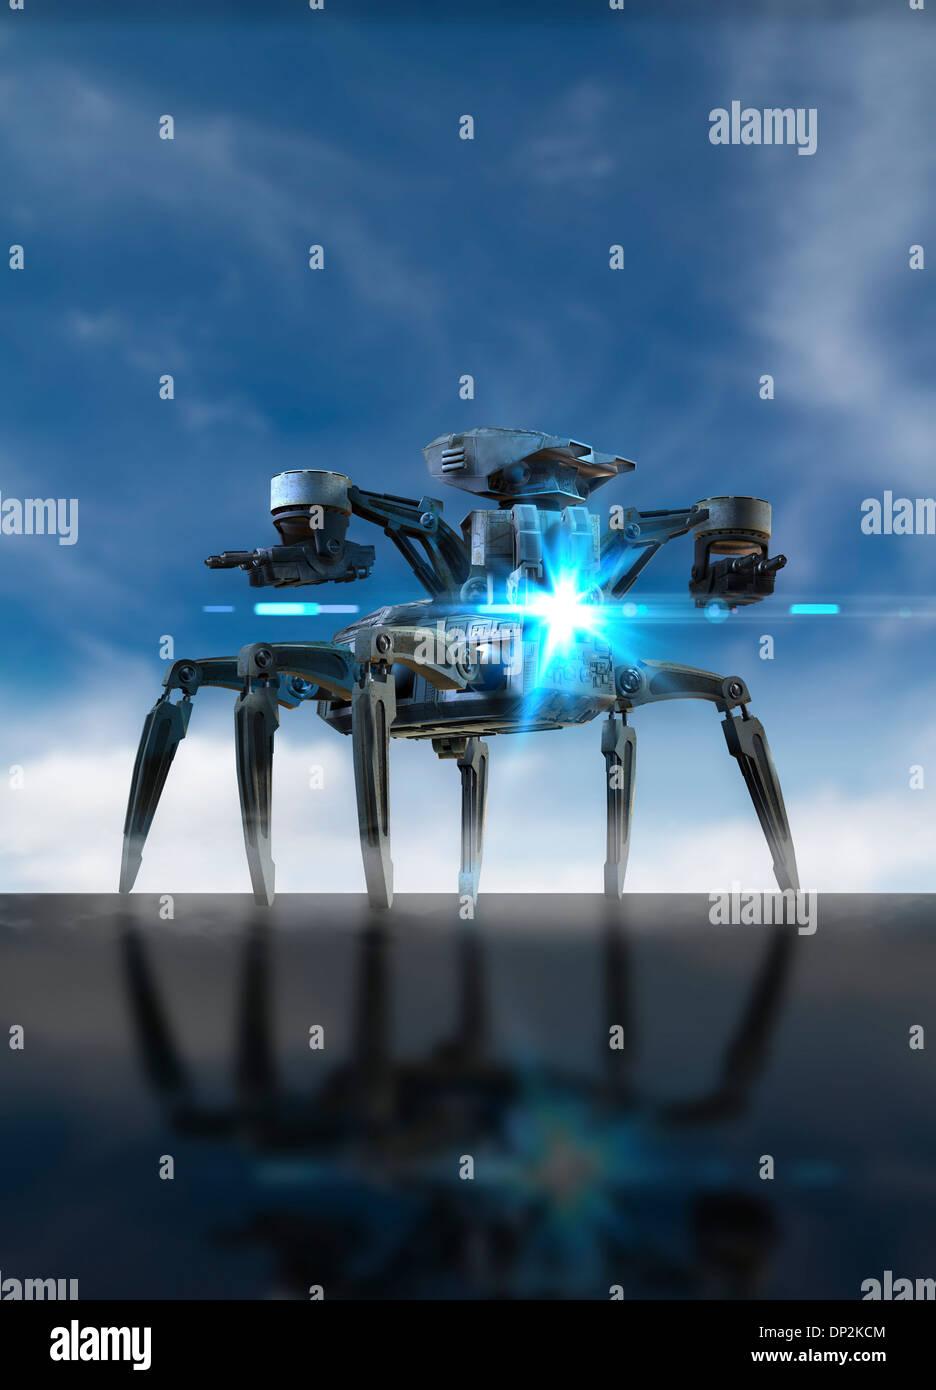 Military machine, conceptual artwork Stock Photo